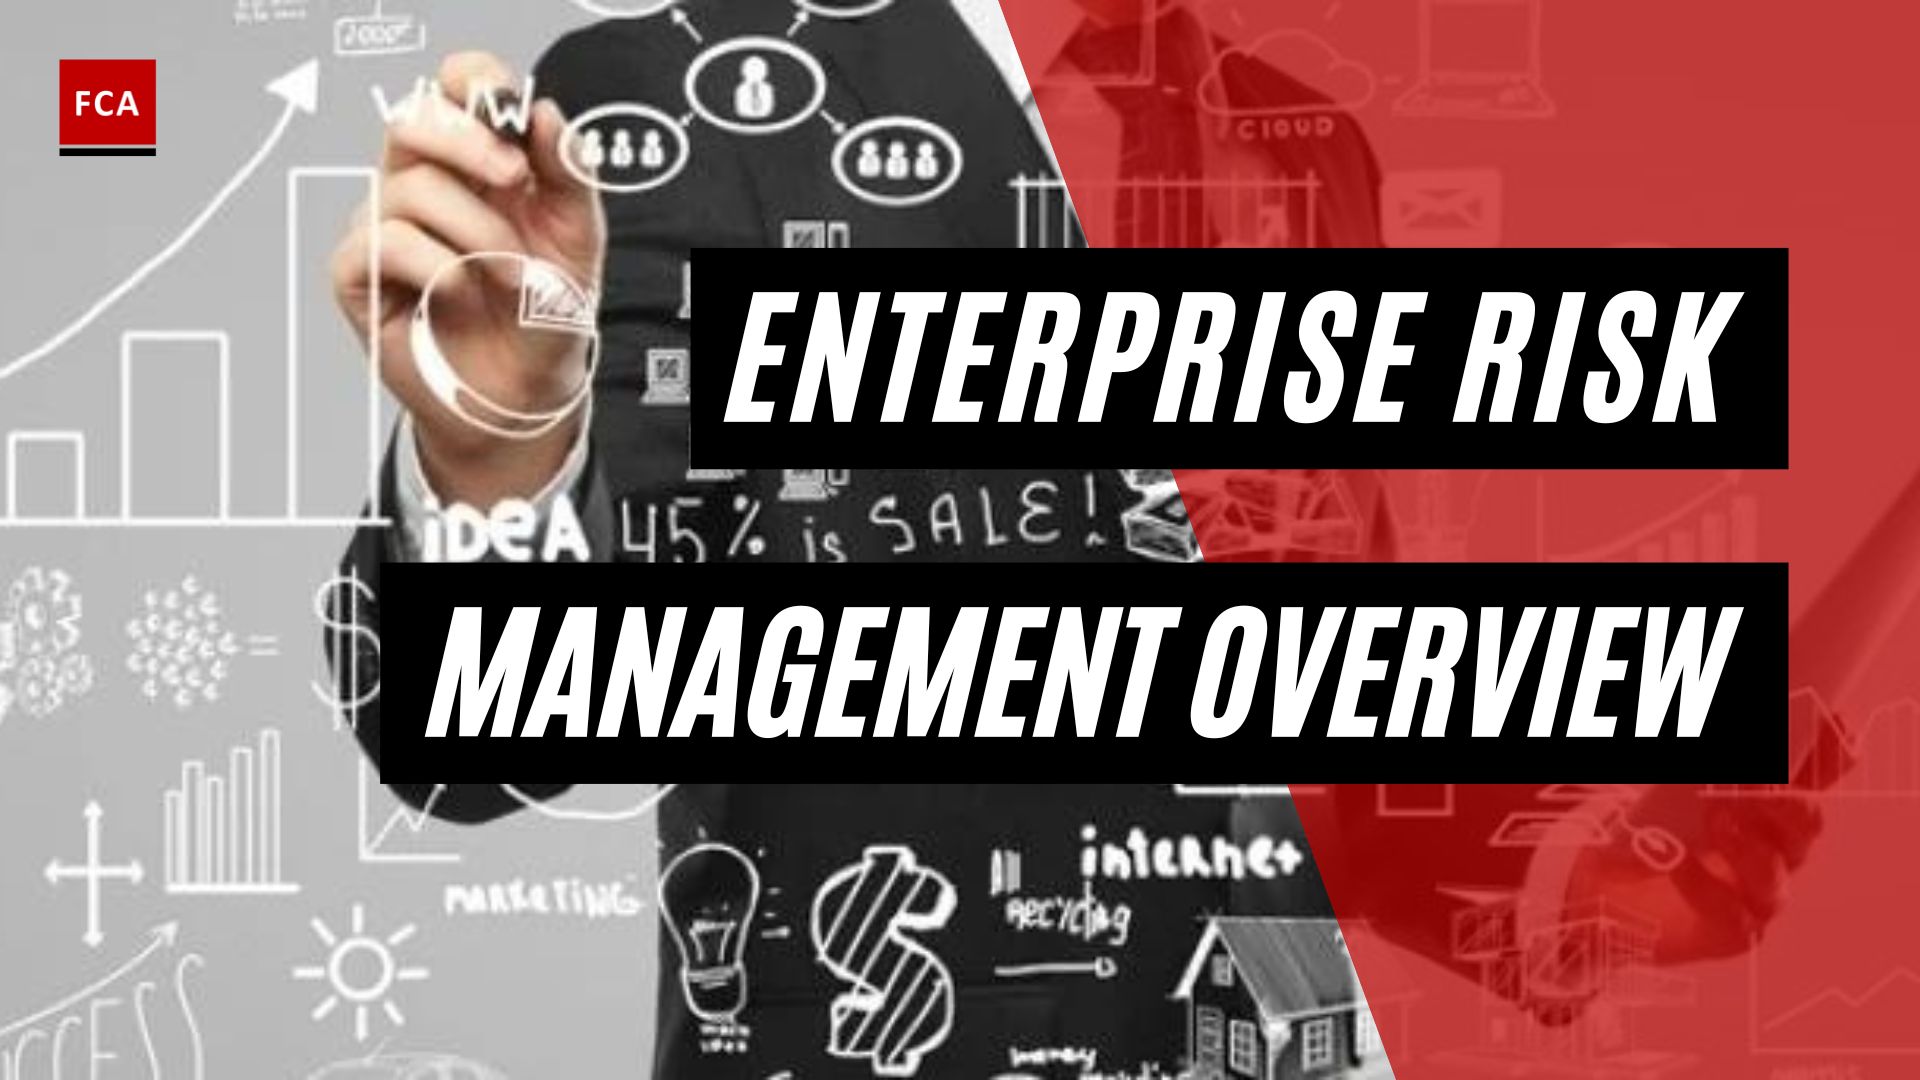 Enterprise Risk Management Overview